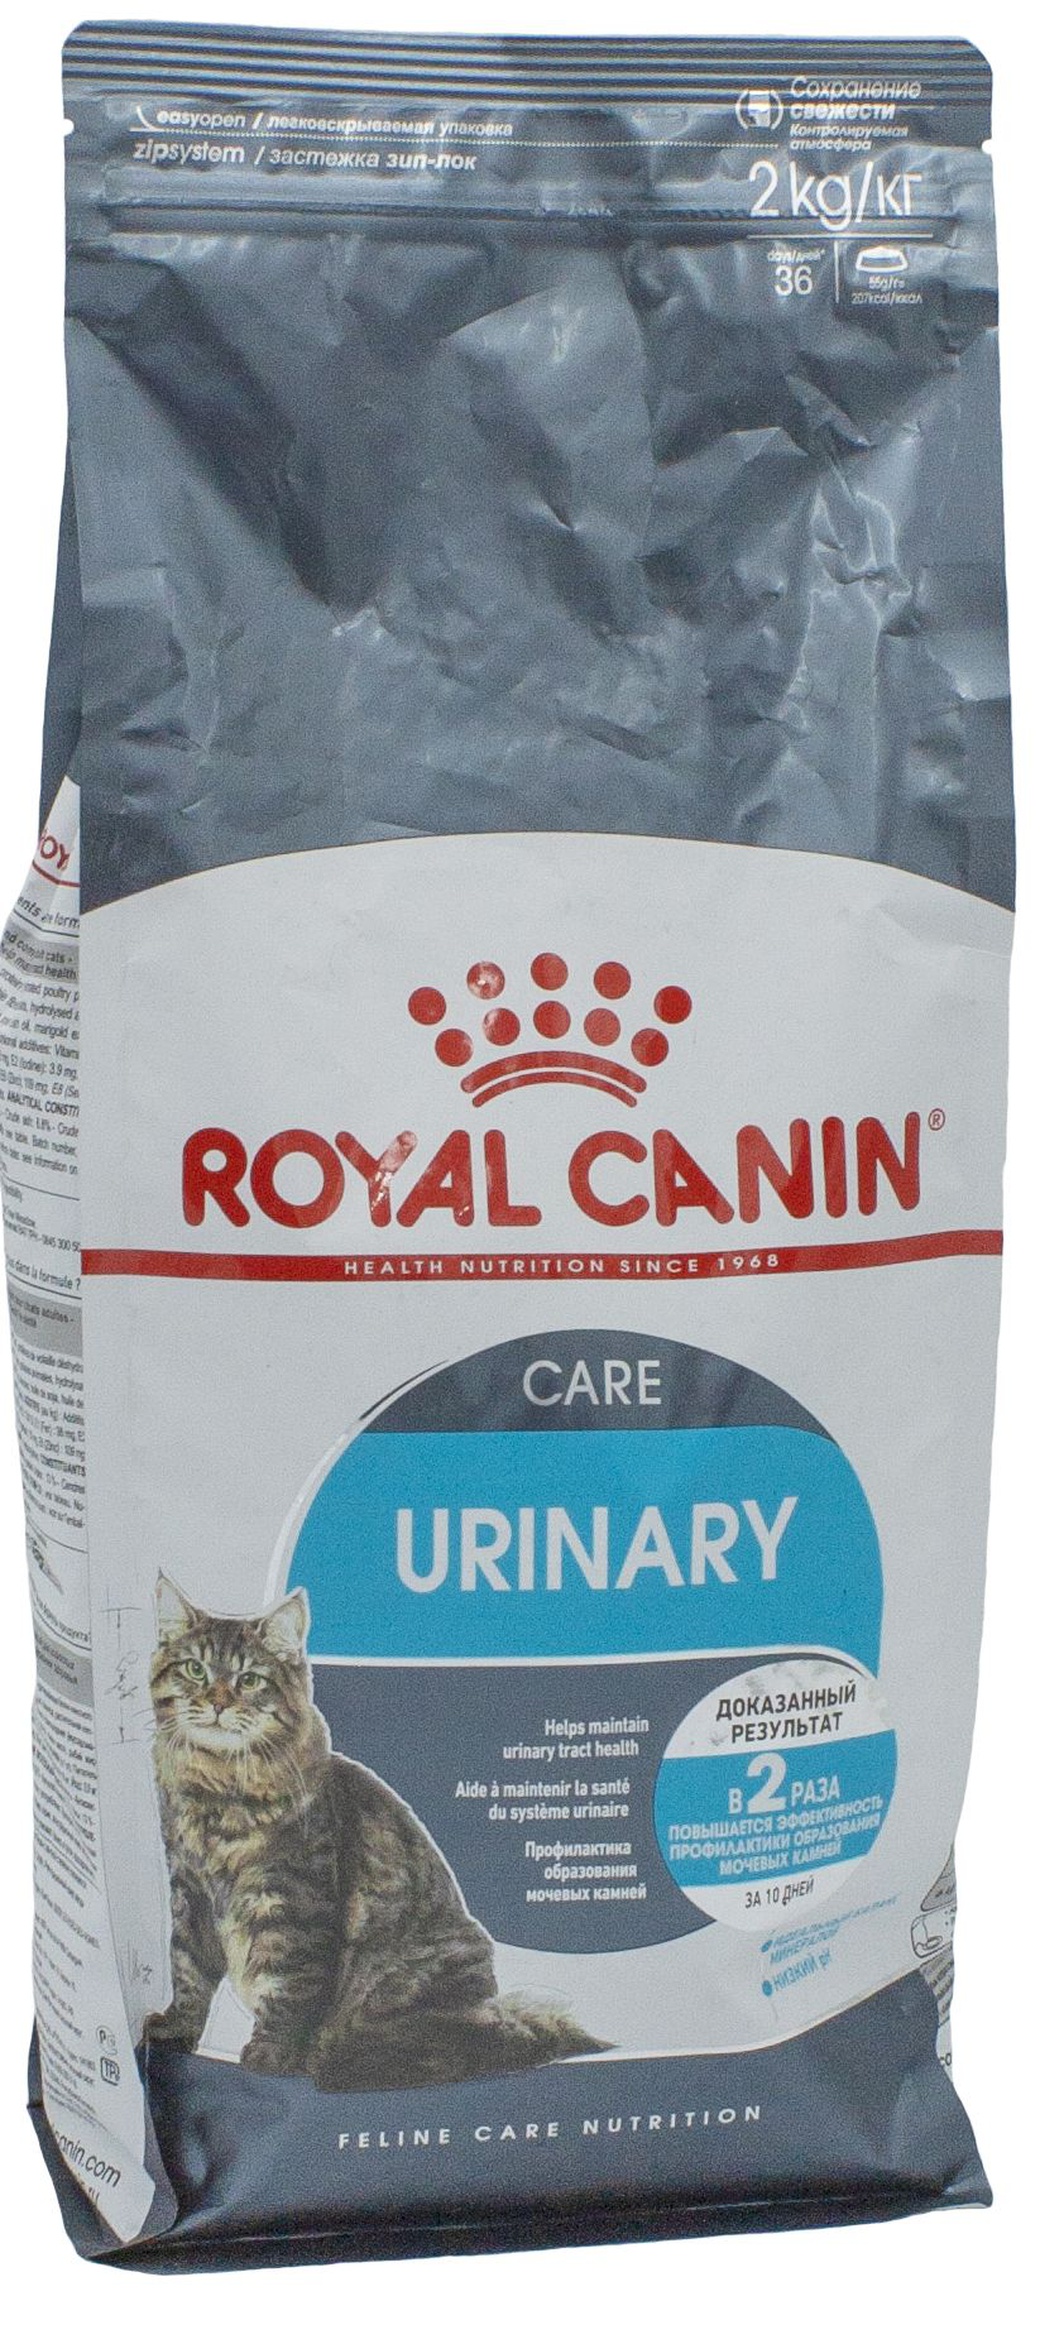 Royal canin urinary care для кошек. Корм для кошек профилактика мкб.